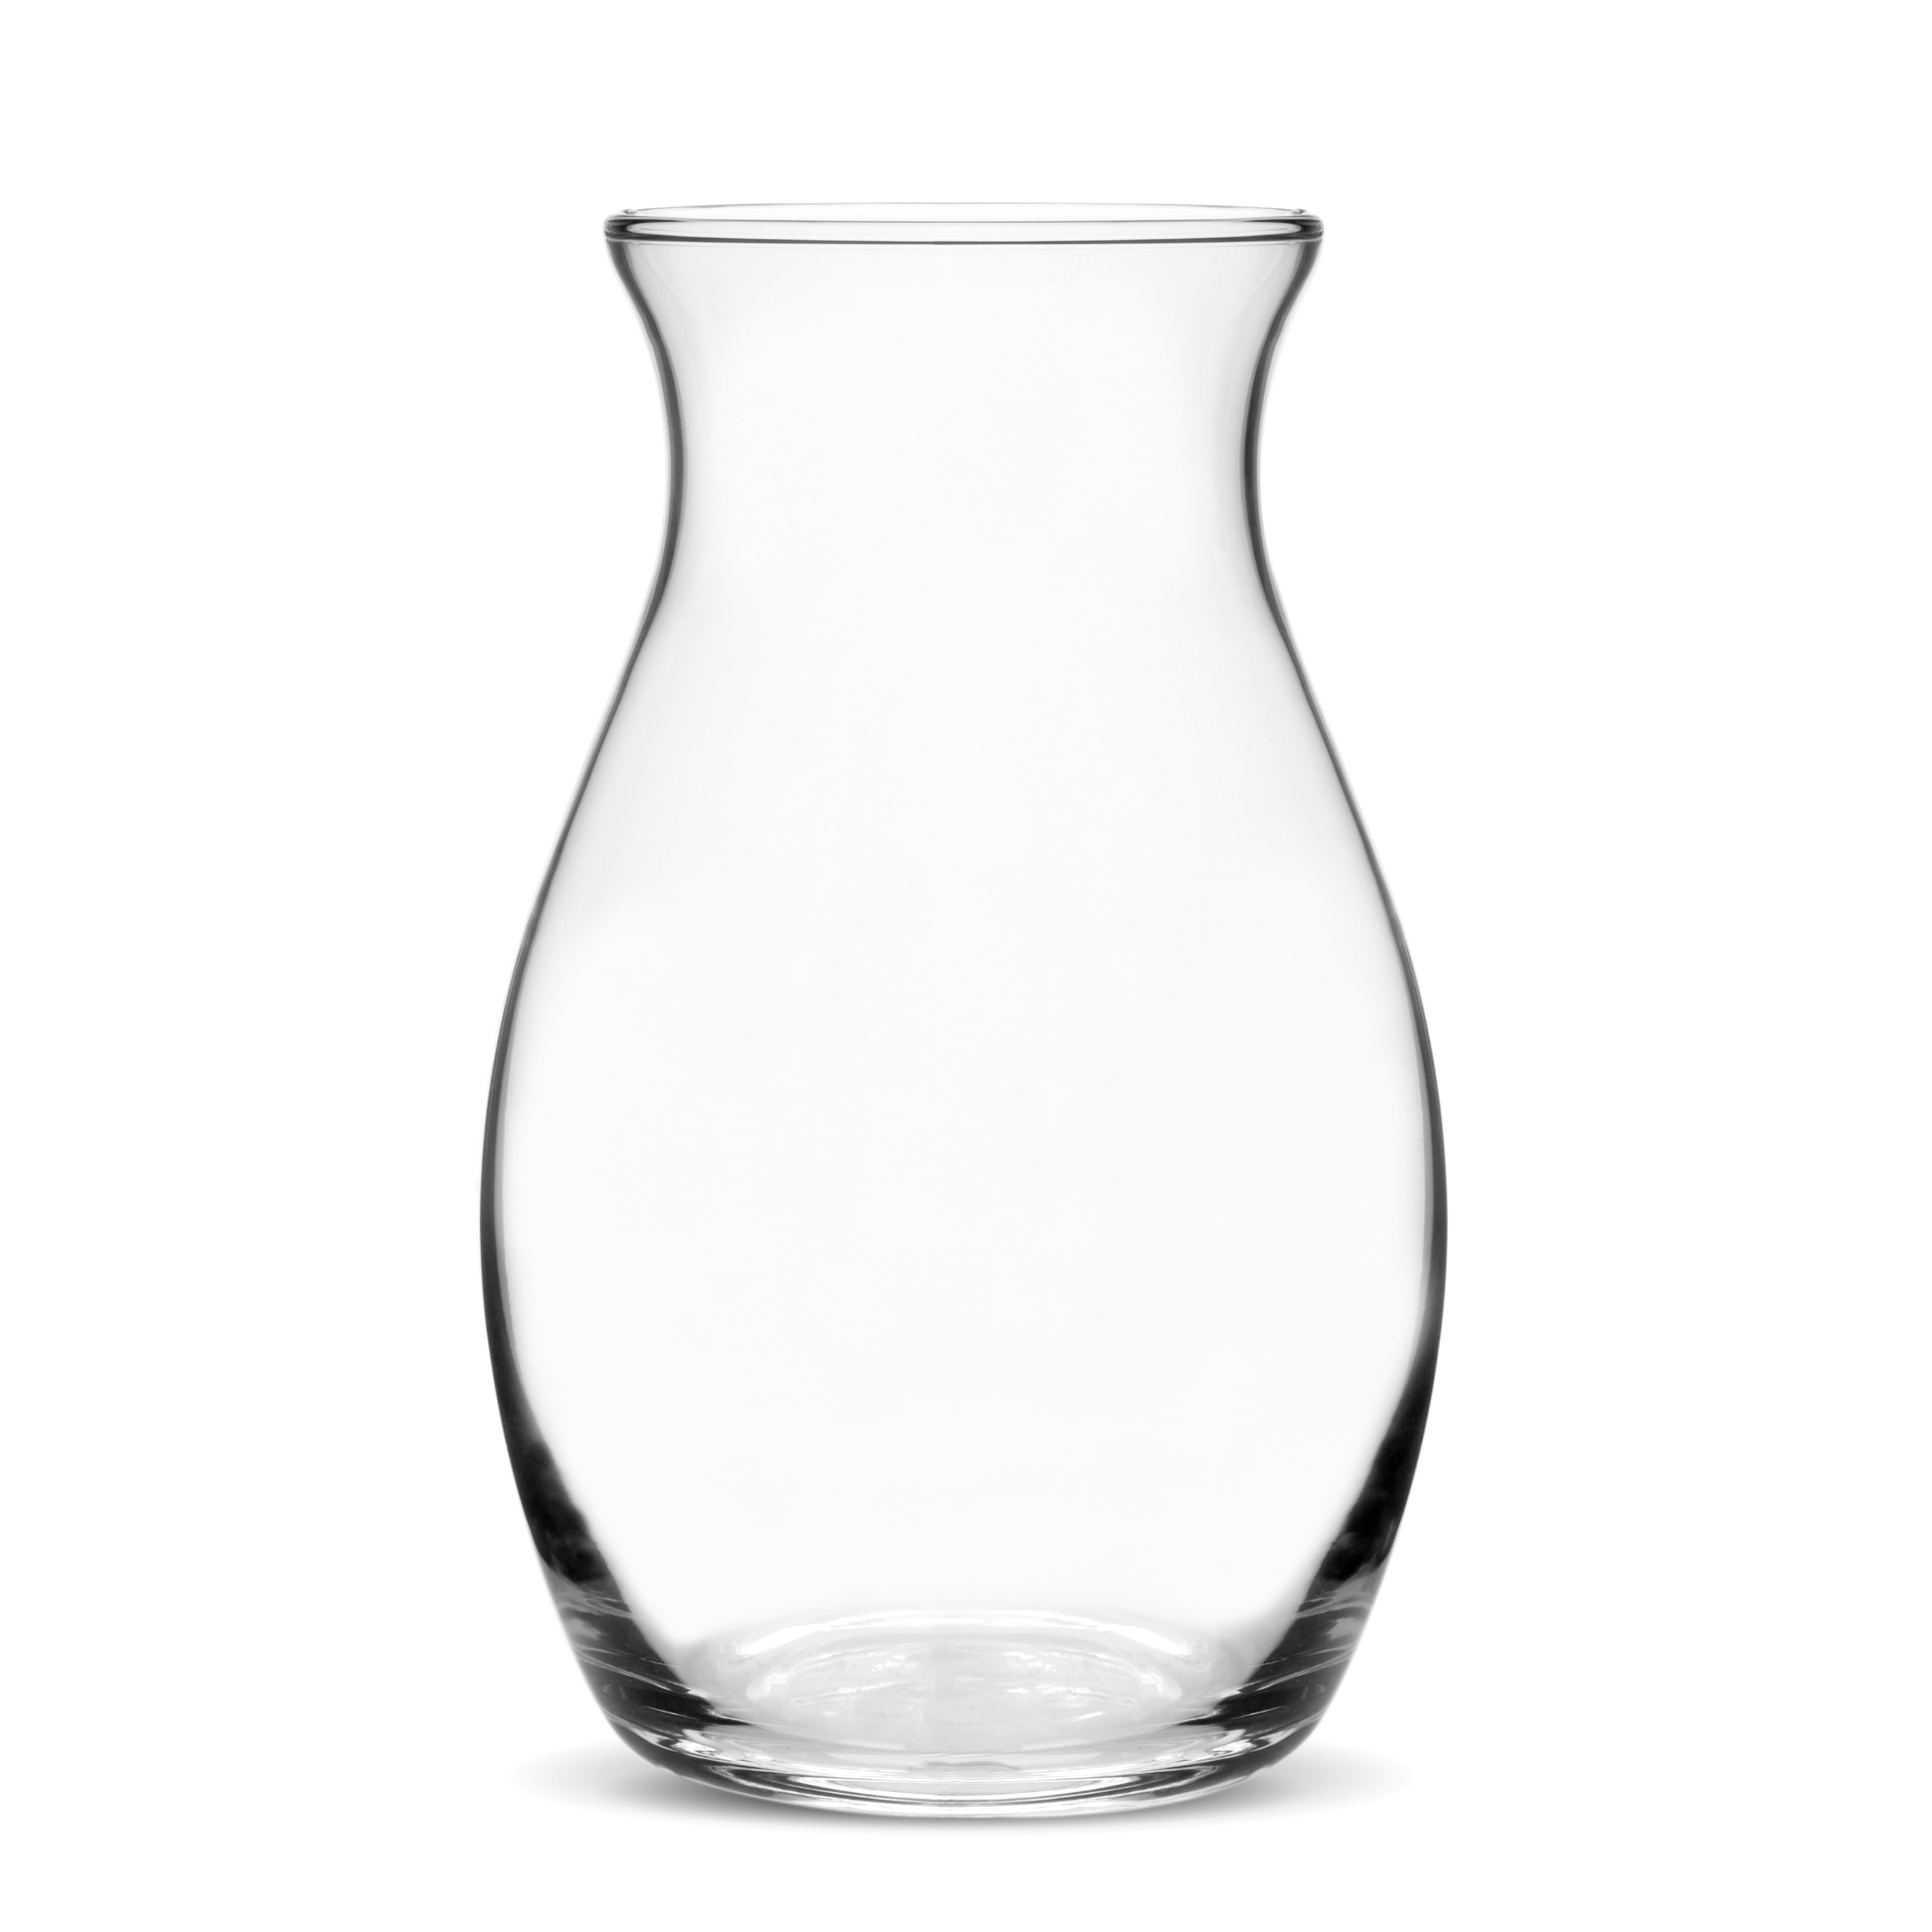 Libbey Glasswares Glass Pot Belly Vase 